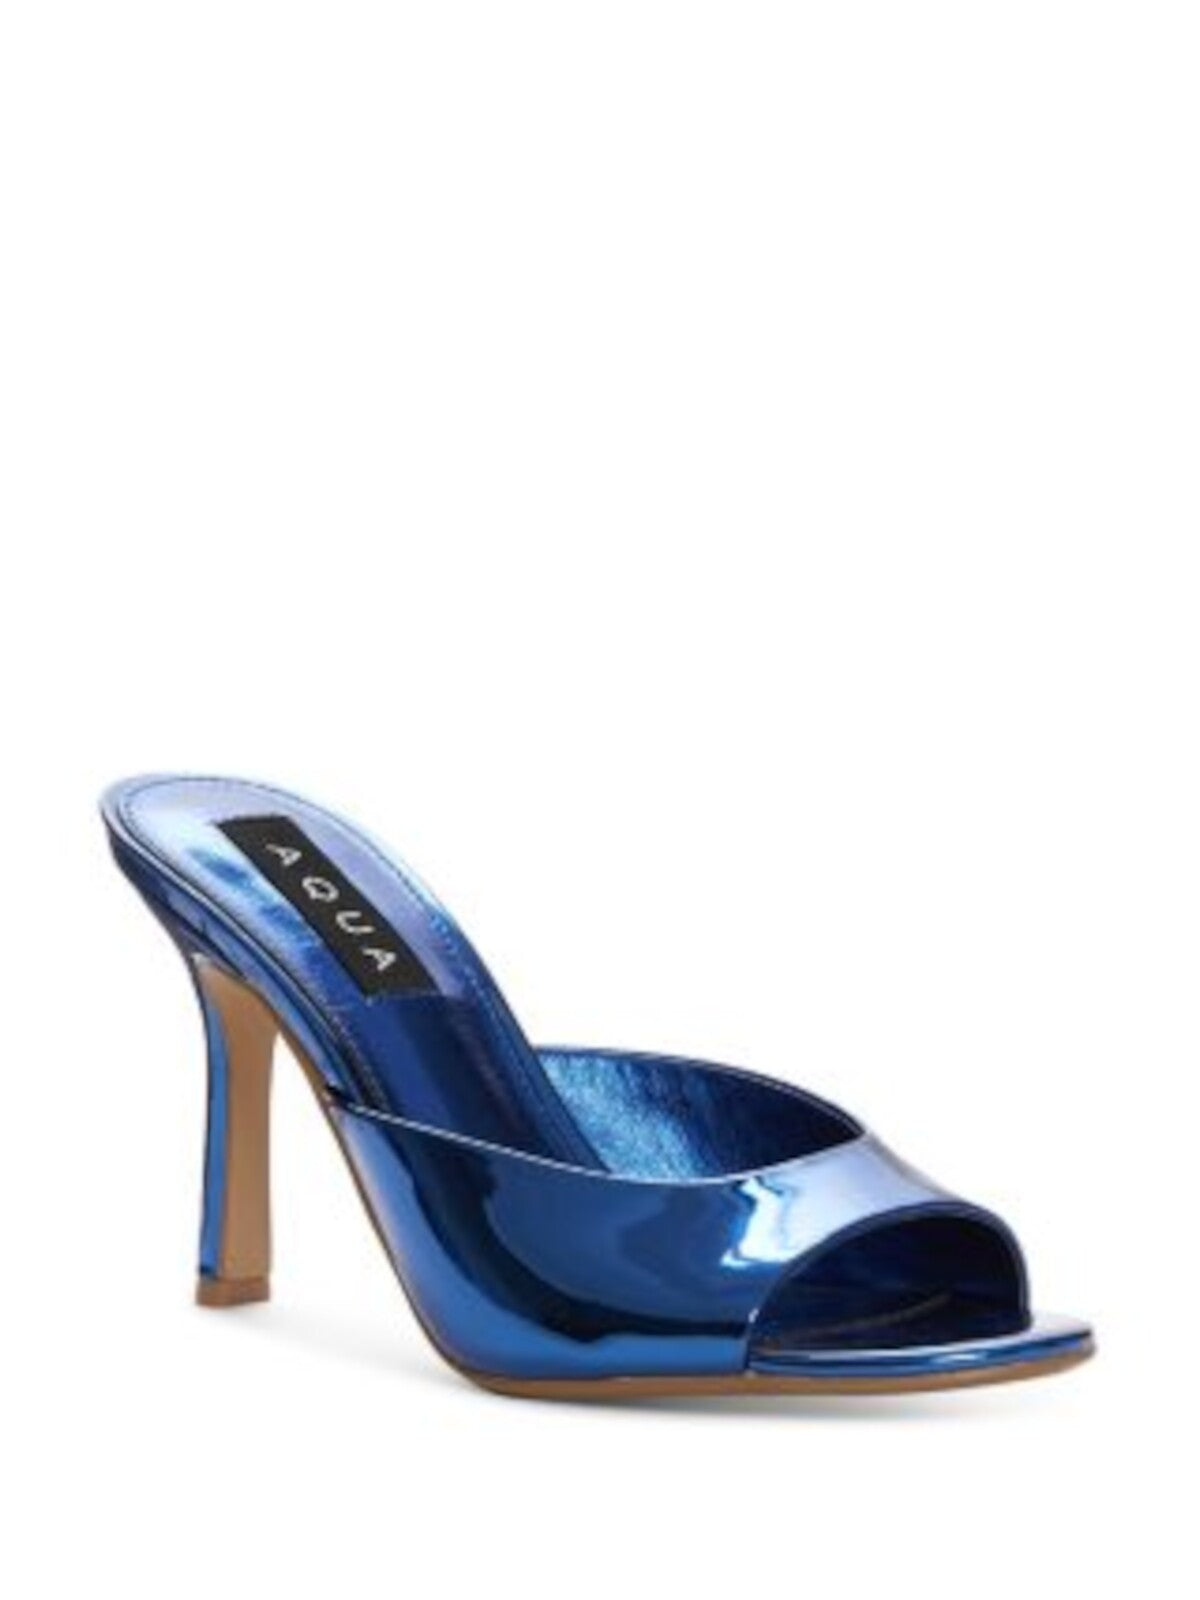 AQUA Womens Blue Metallic Maeve Reilly Peep Toe Stiletto Slip On Dress Heeled Sandal 9.5 M